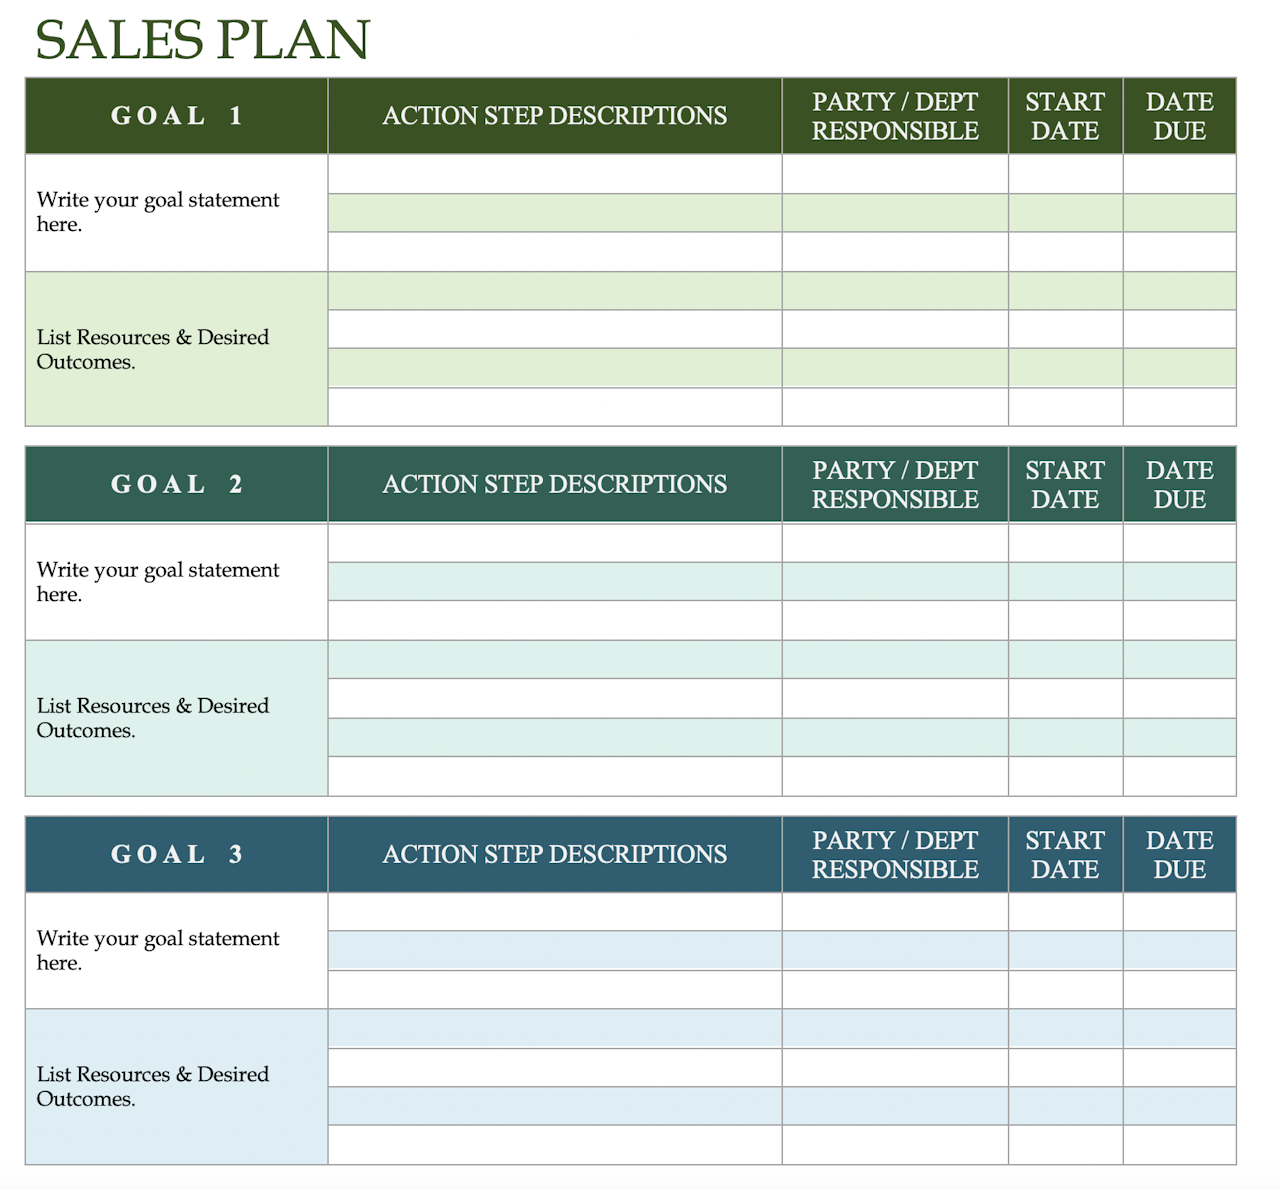 Strategic Sales Plans Examples: sales plan template